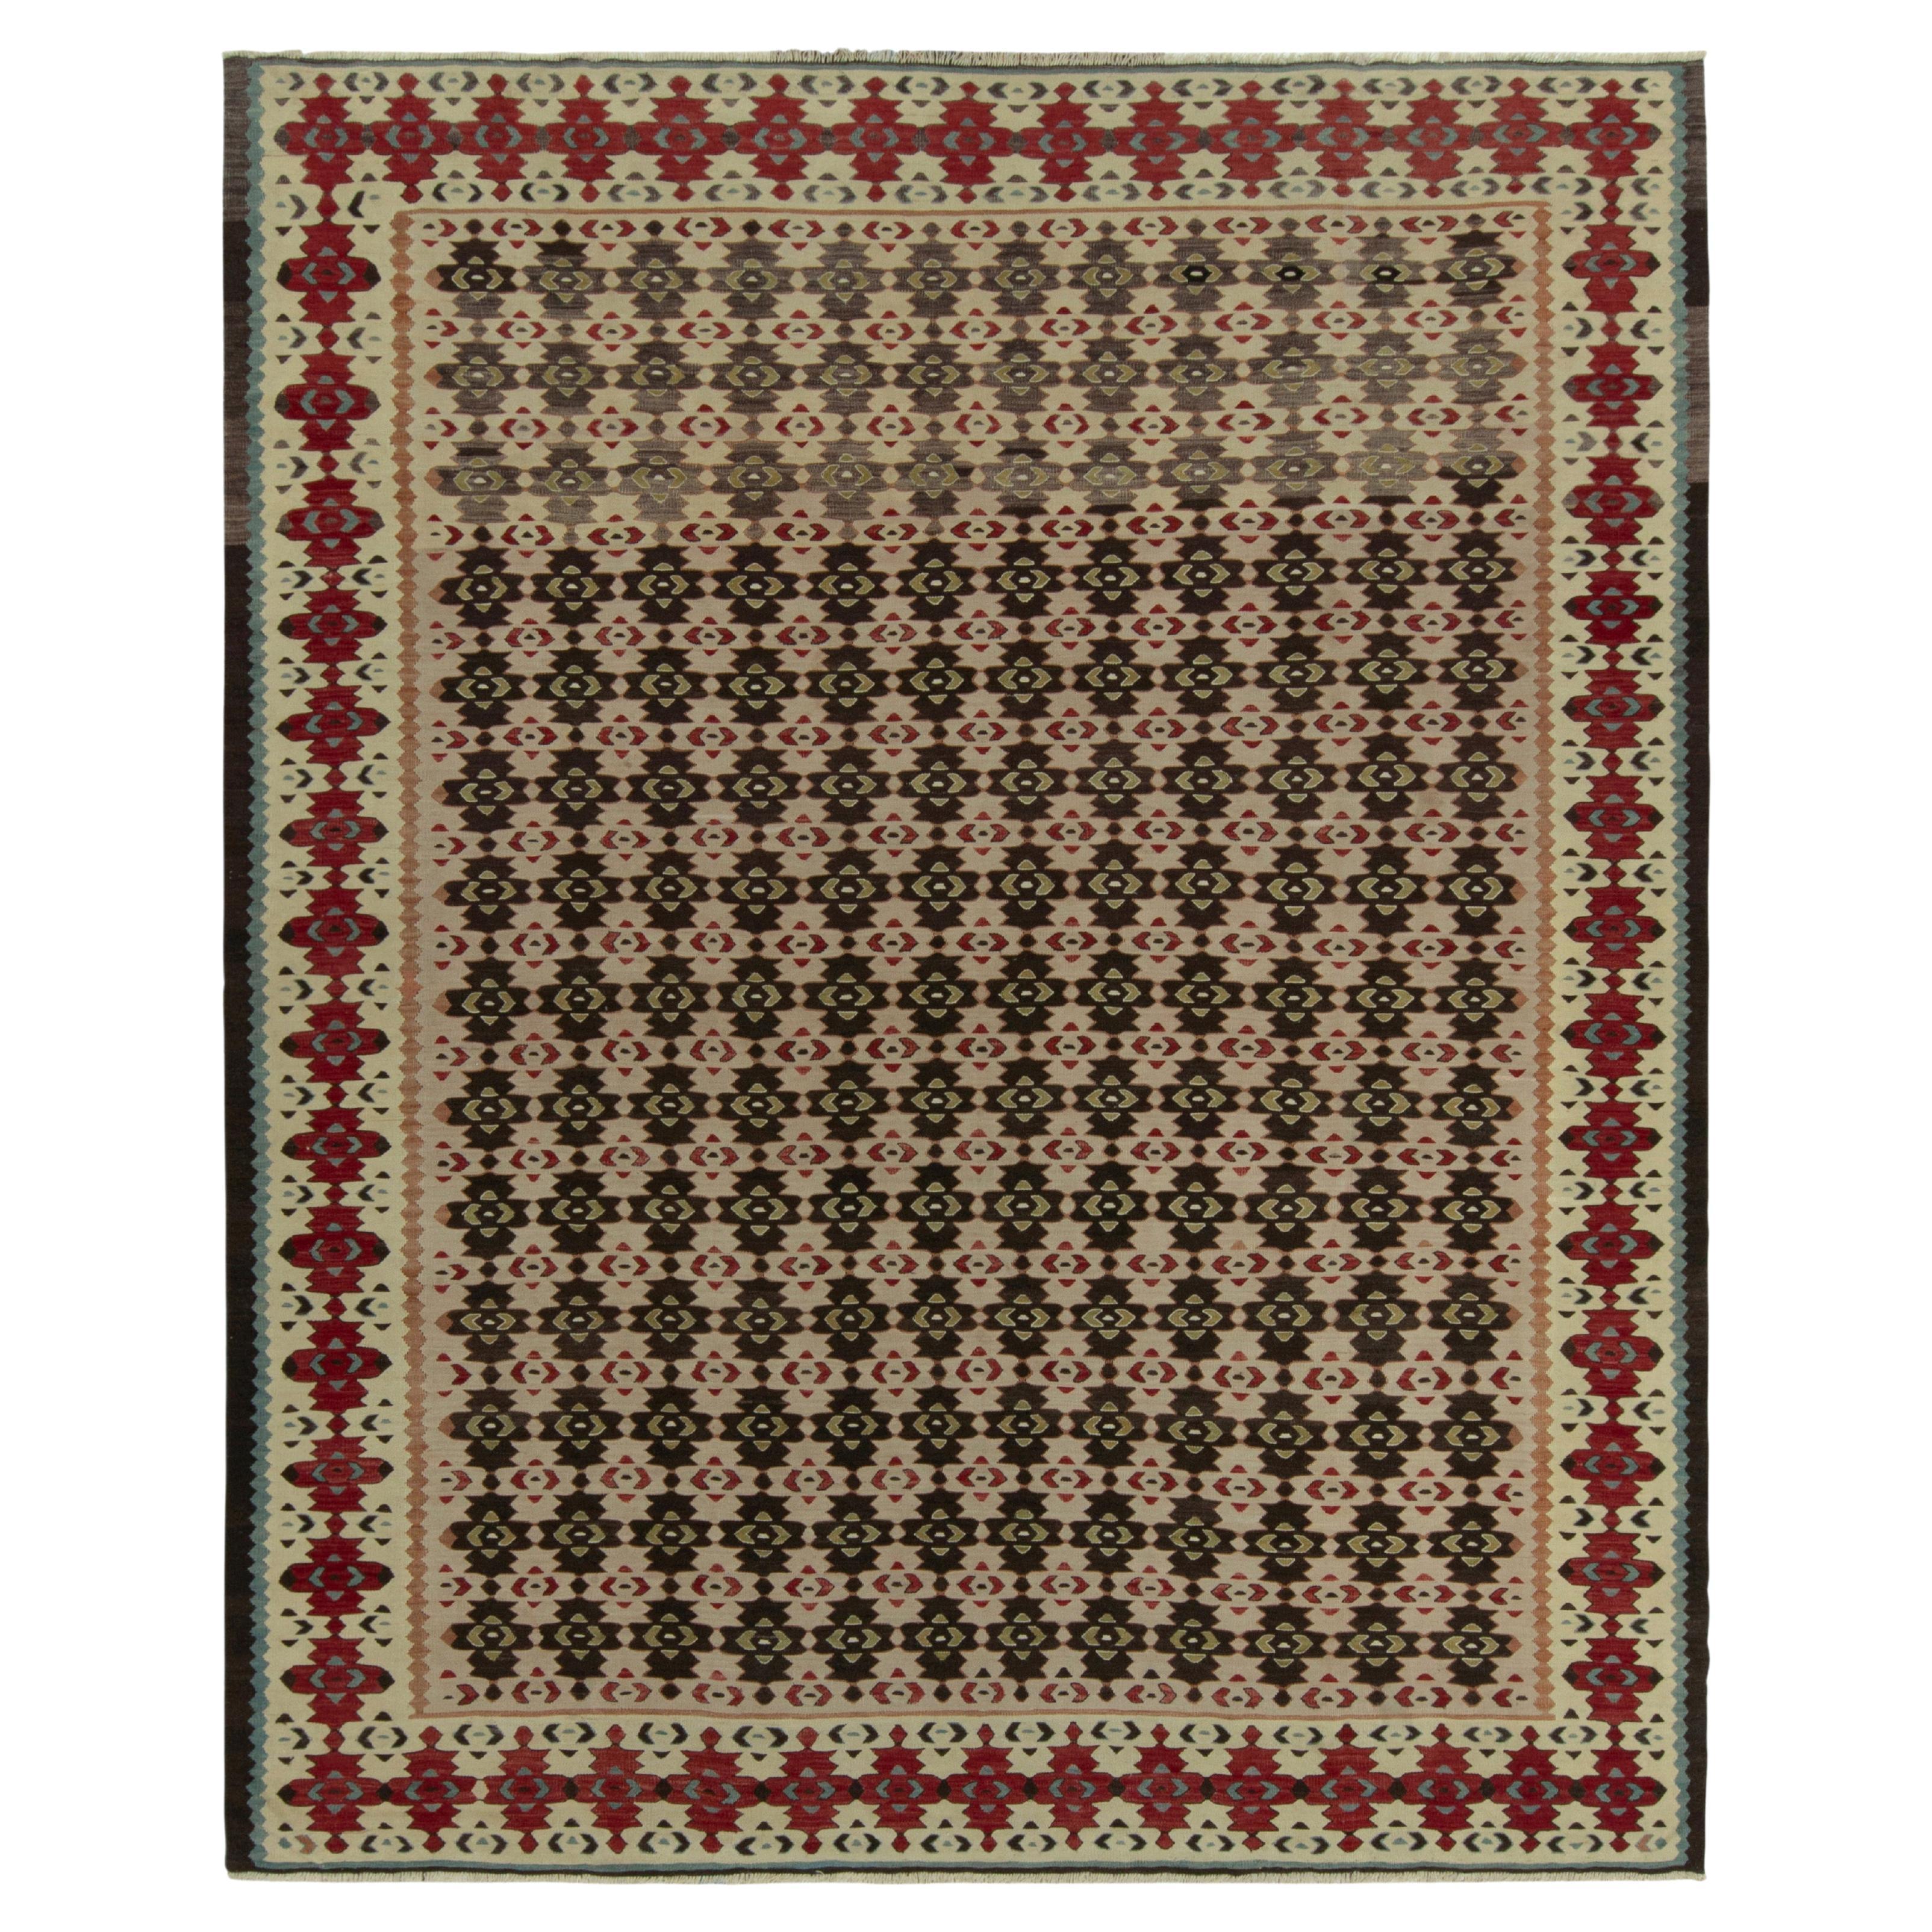 1920s Antique Kilim in Red & Beige-Brown Tribal Geometric Pattern by Rug & Kilim